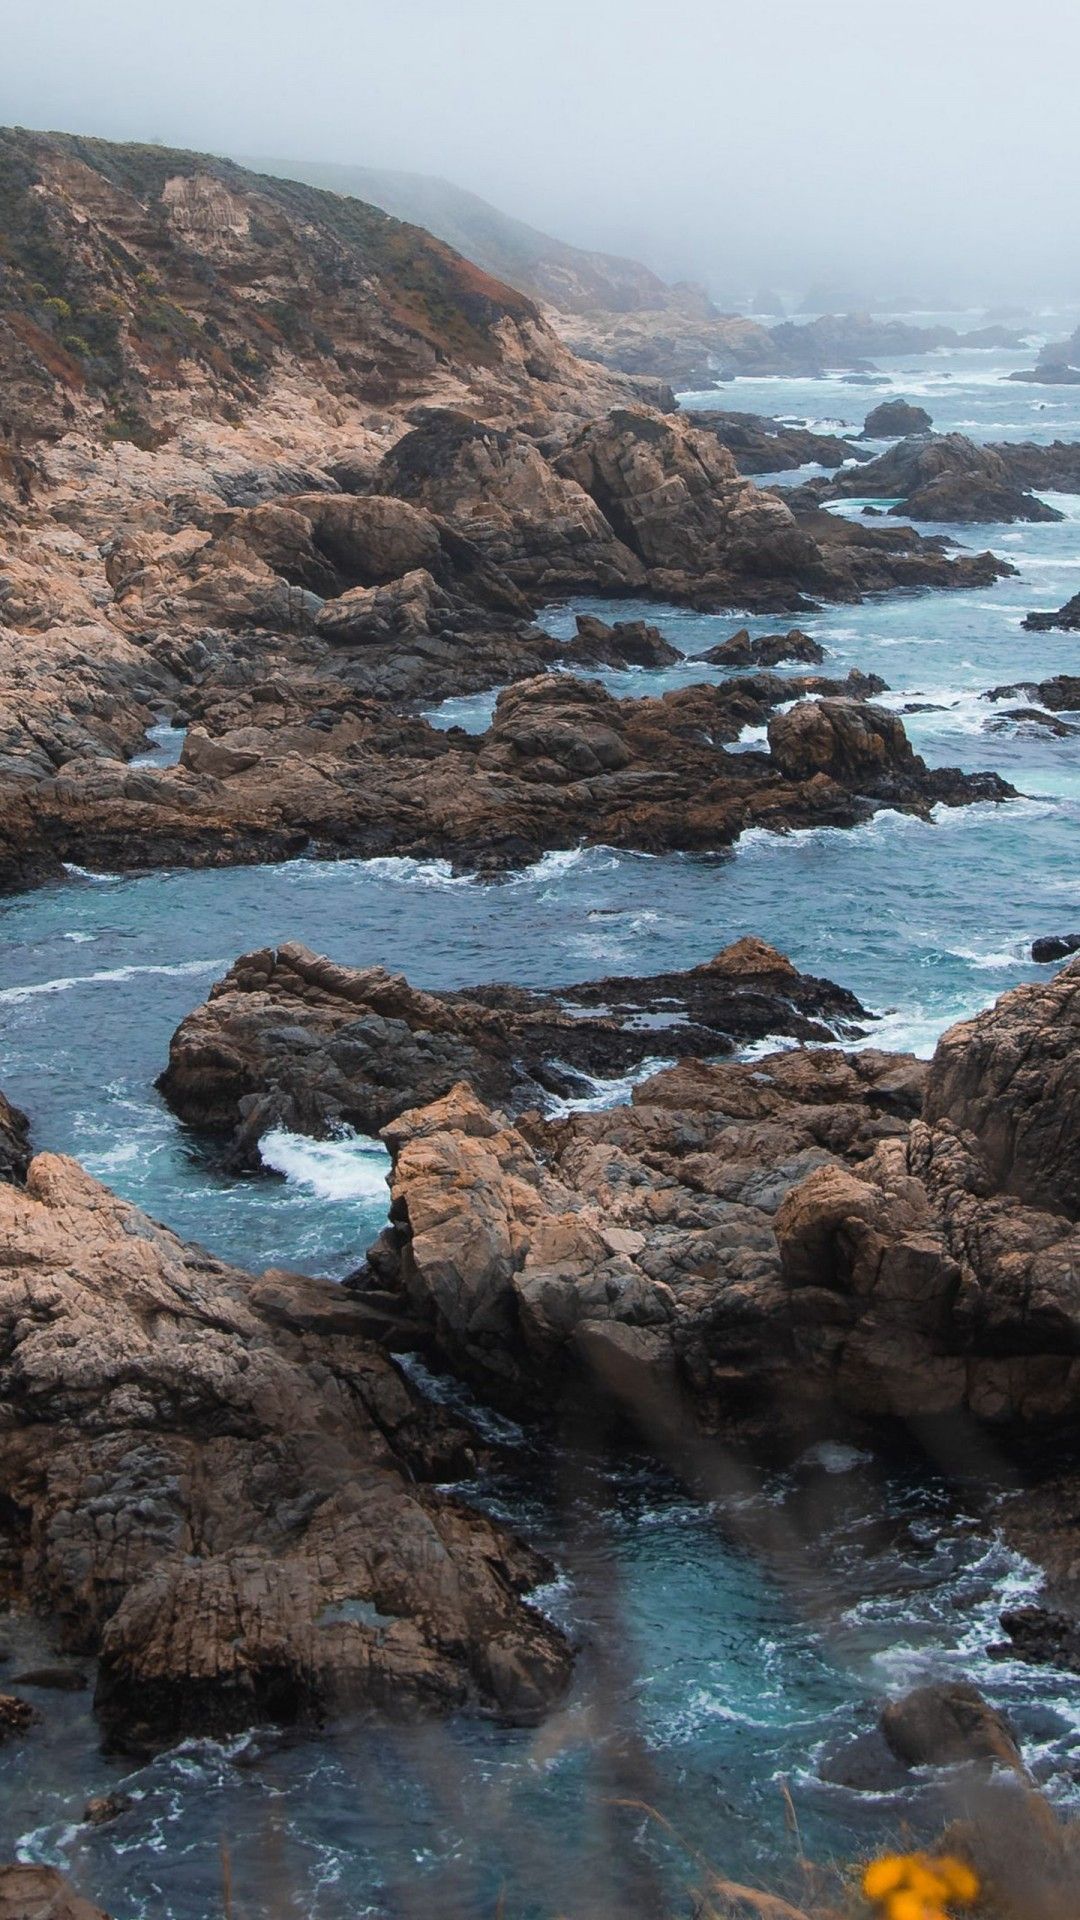 A rocky coastline with waves crashing against the rocks - Coast